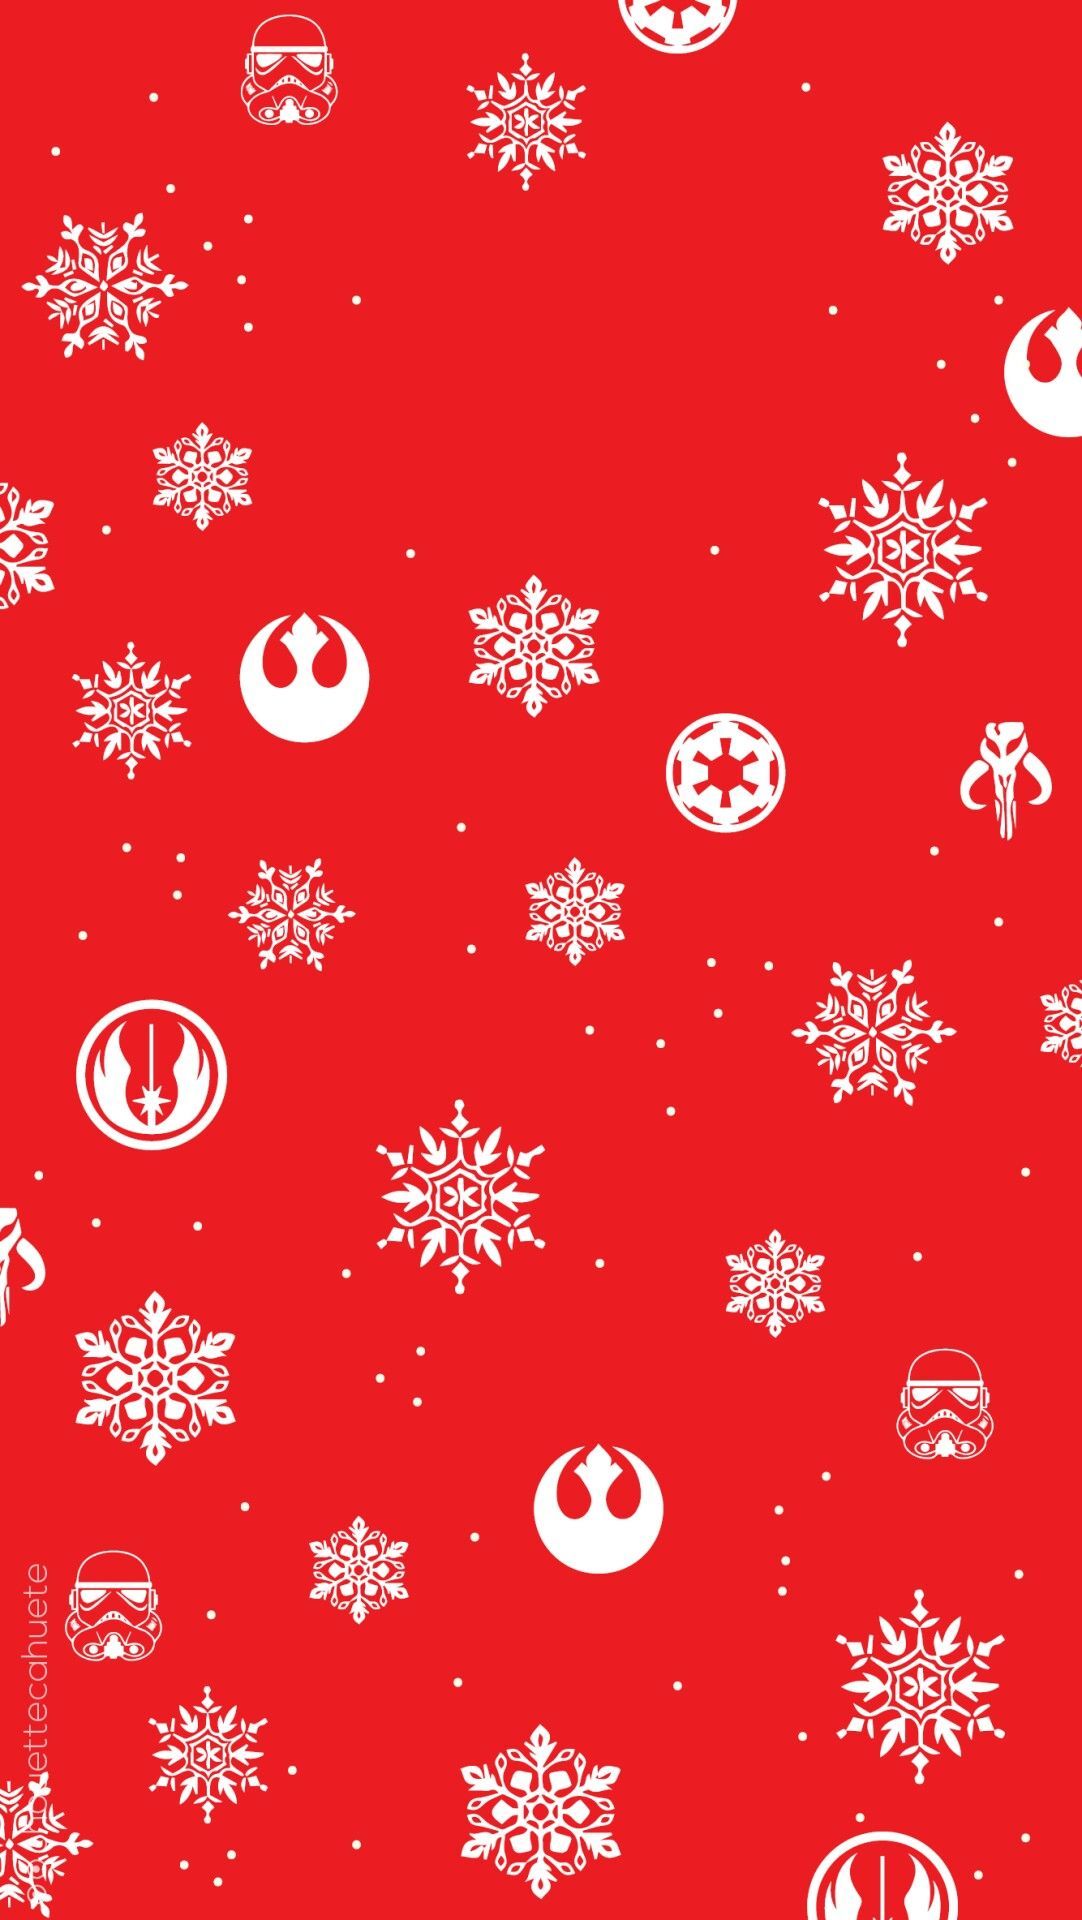 Christmas star wars. Star wars christmas, Star wars wallpaper, Star wars art